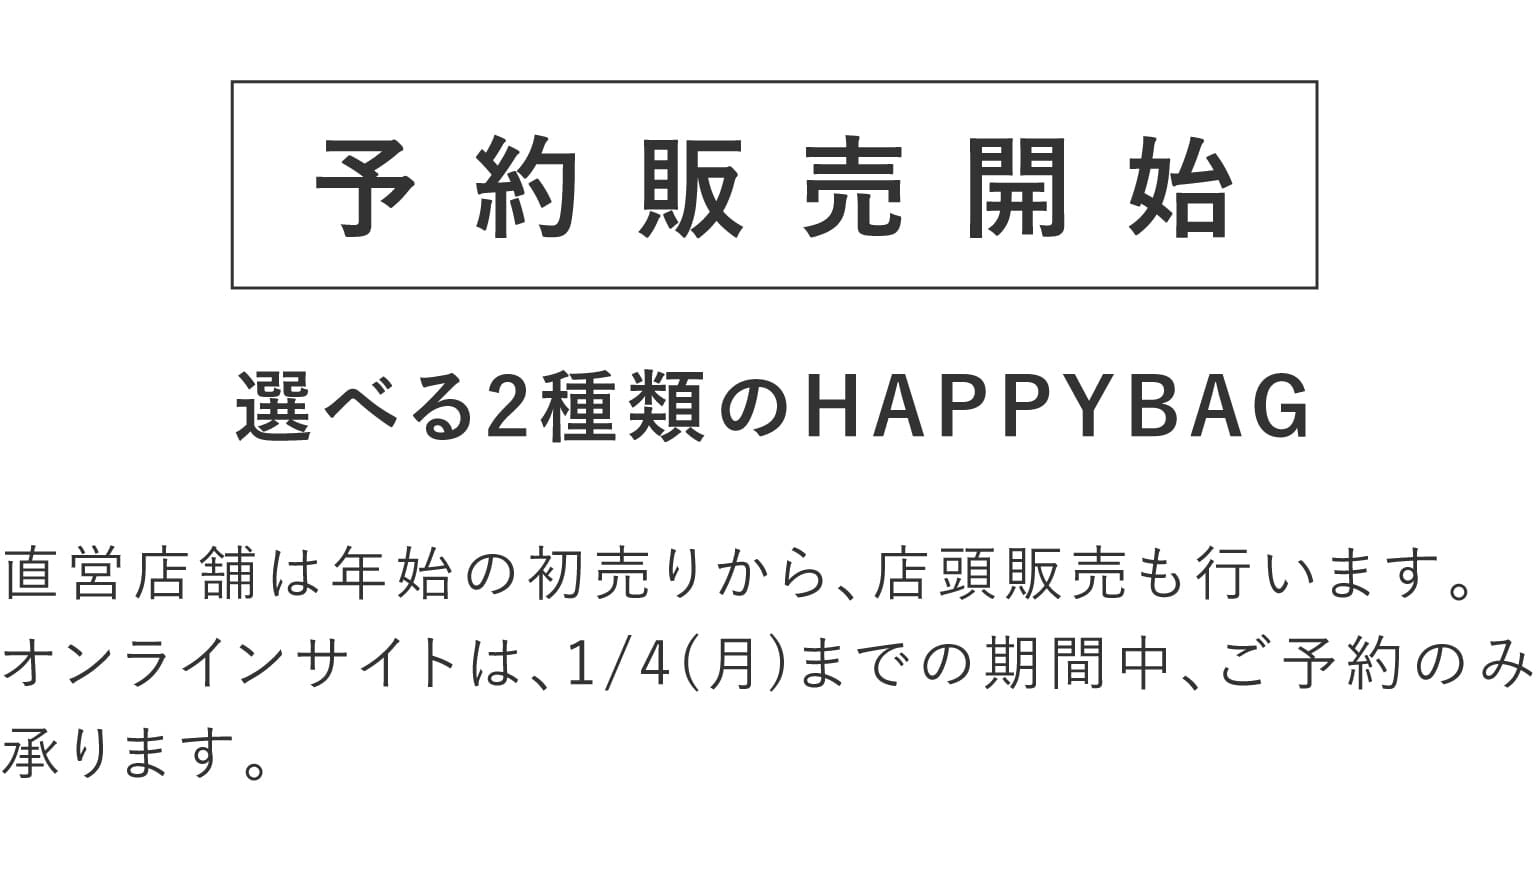 Happybag2021